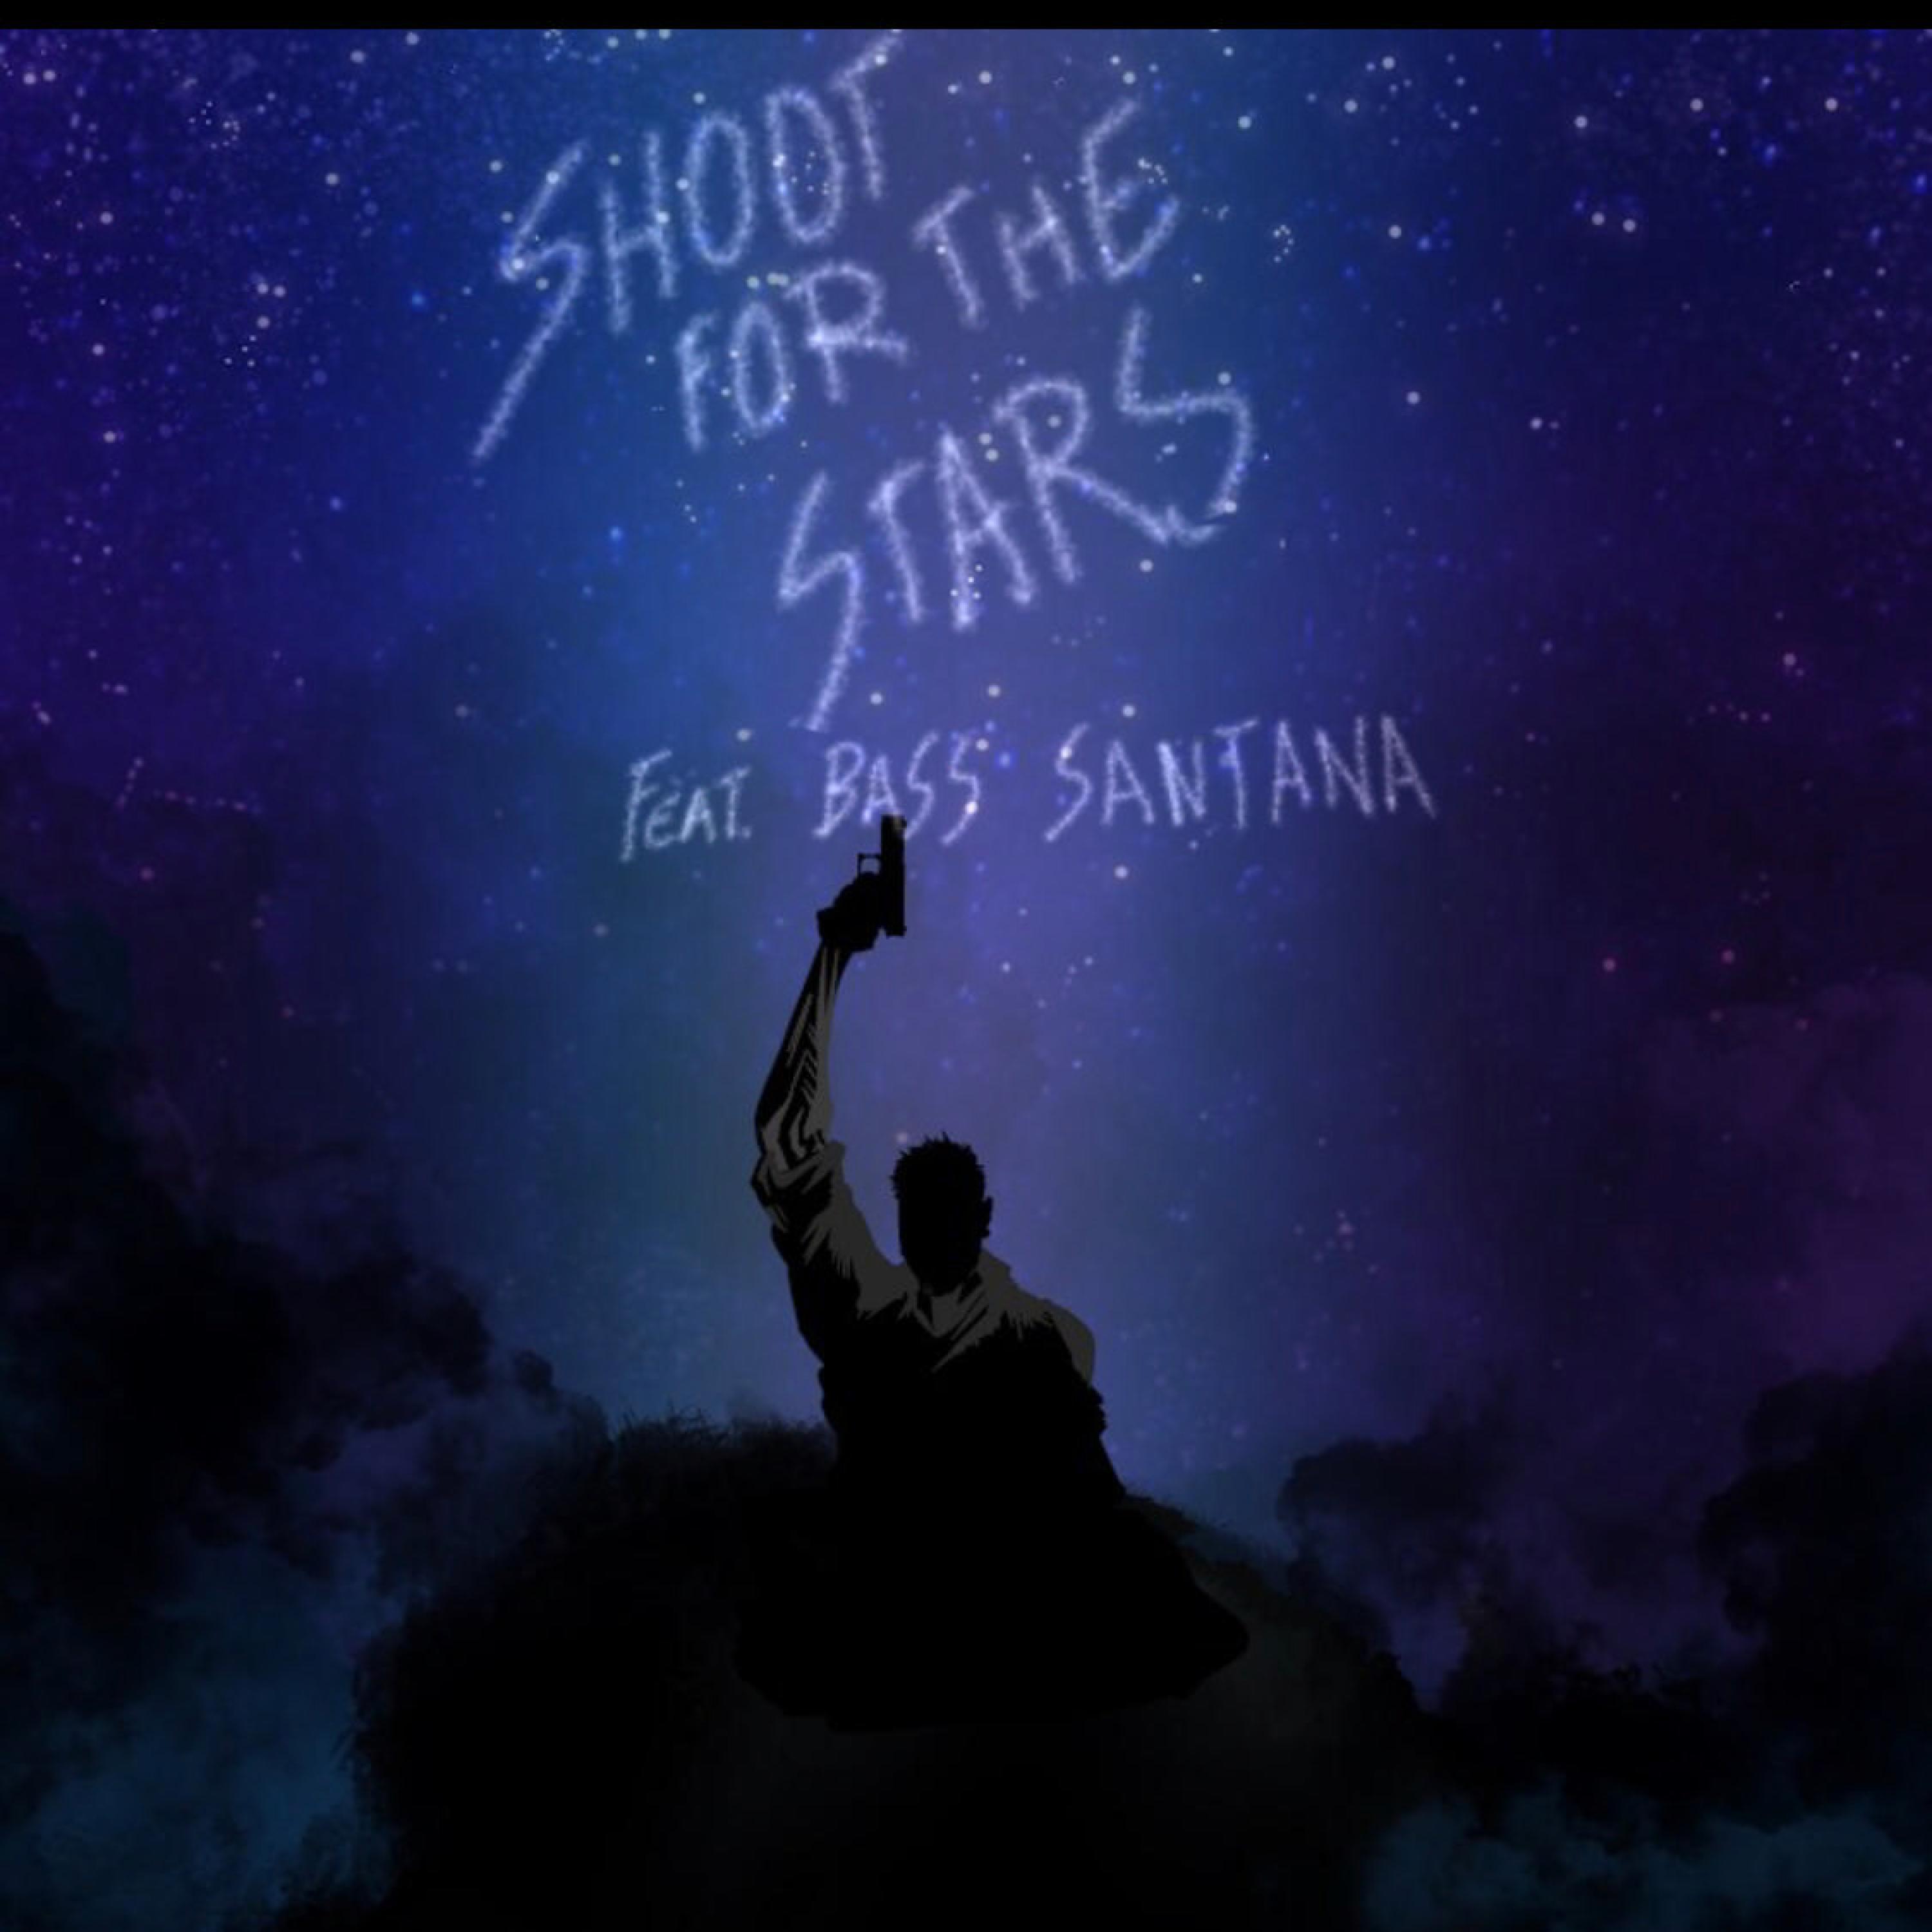 Juice 570 - Shoot for the Stars (feat. Bass Santana)